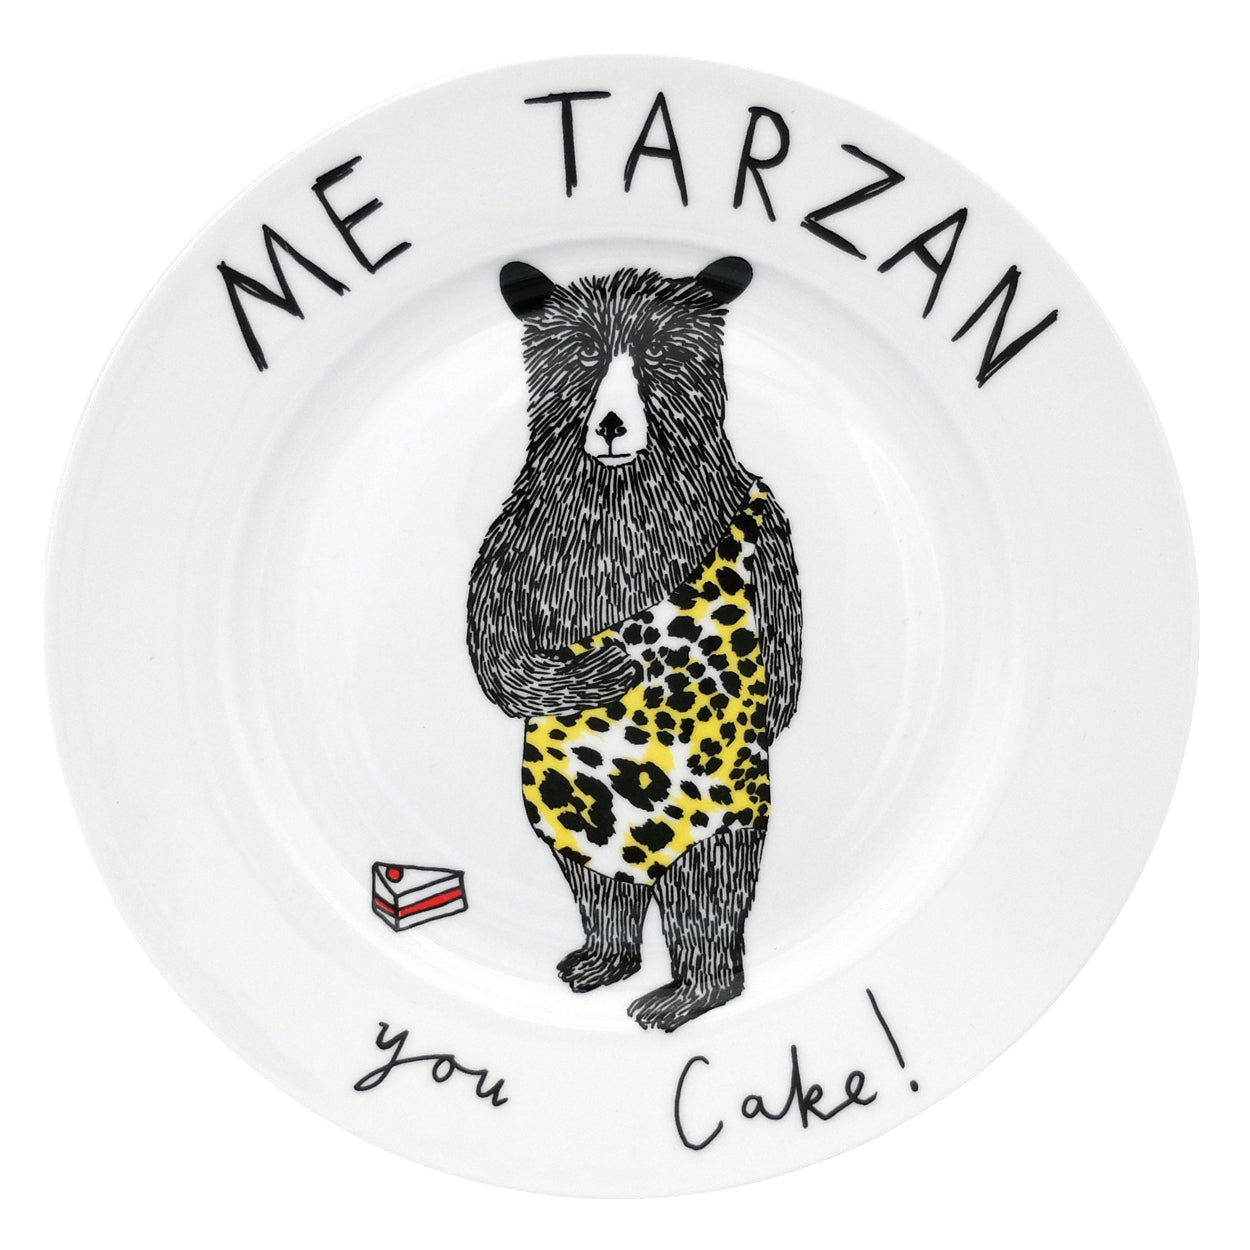 'Me Tarzan You Cake' Side Plate